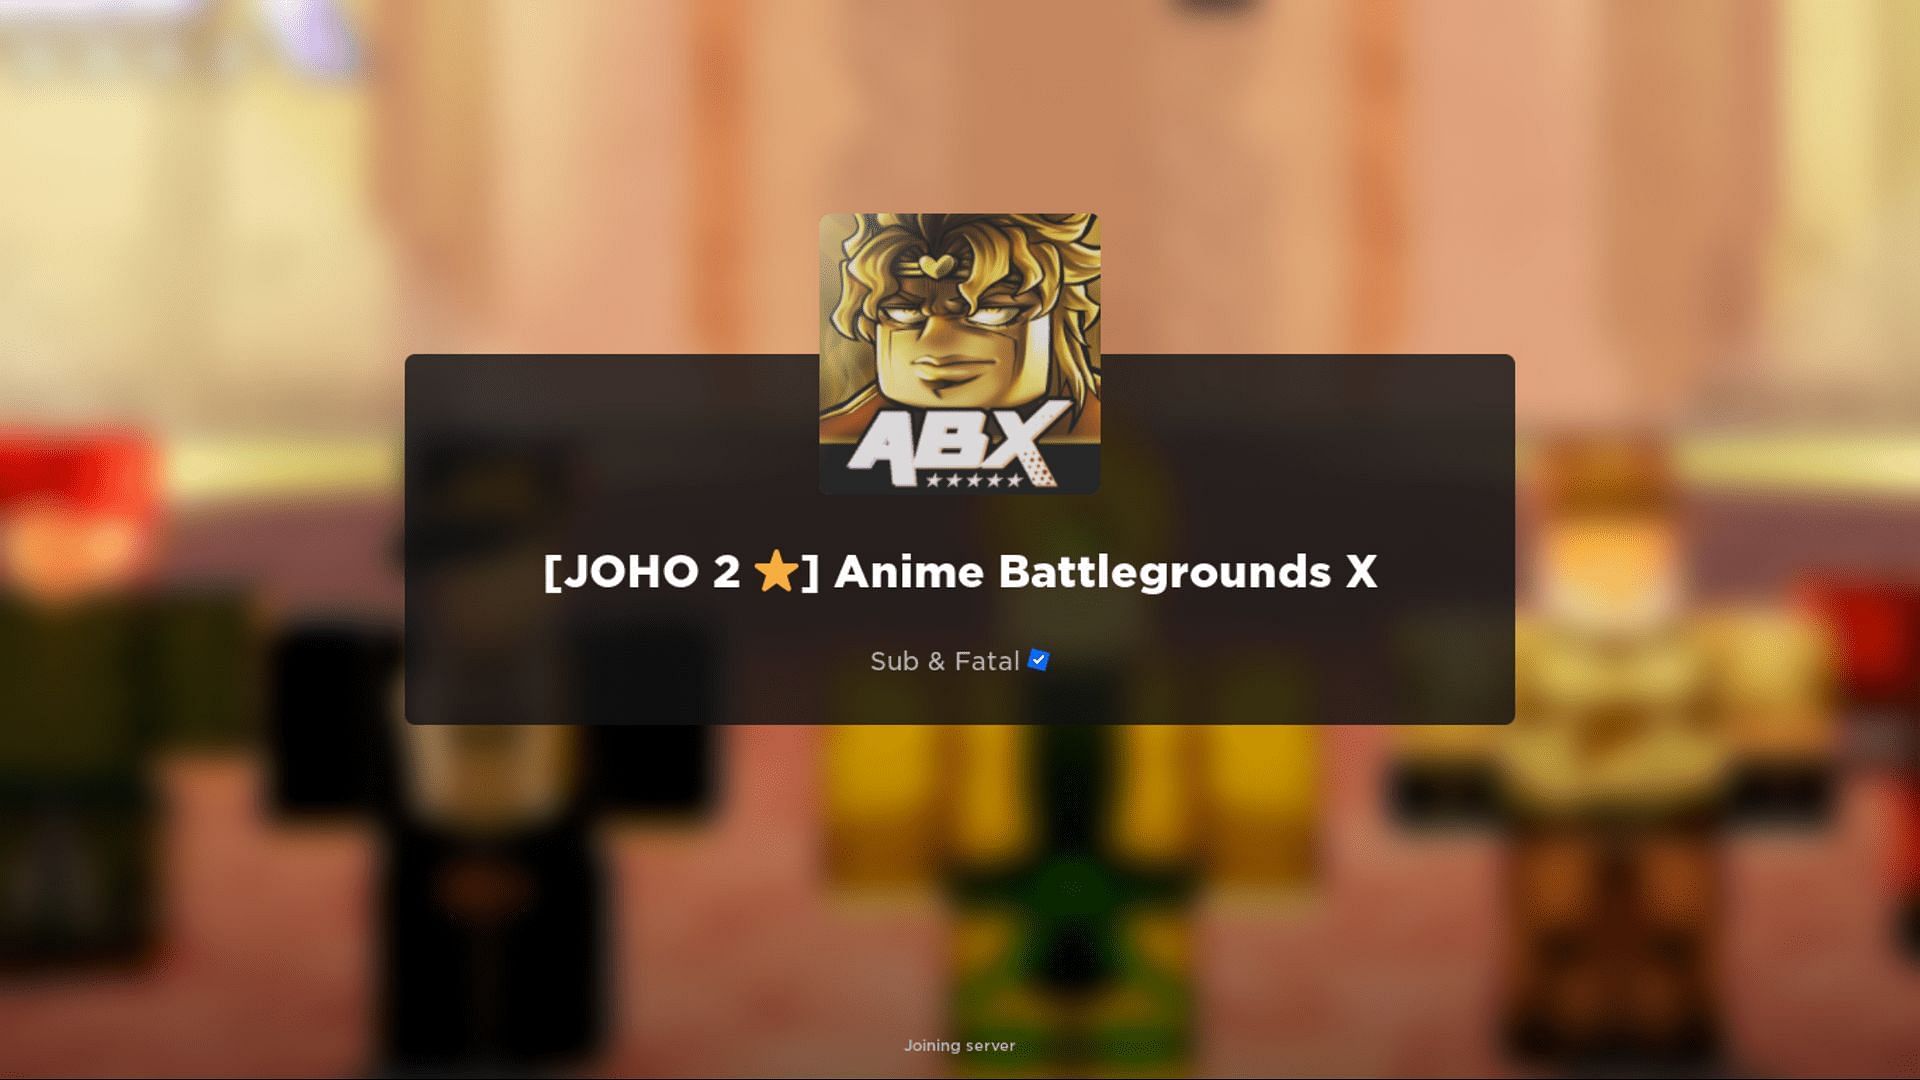 Anime Battlegrounds X codes